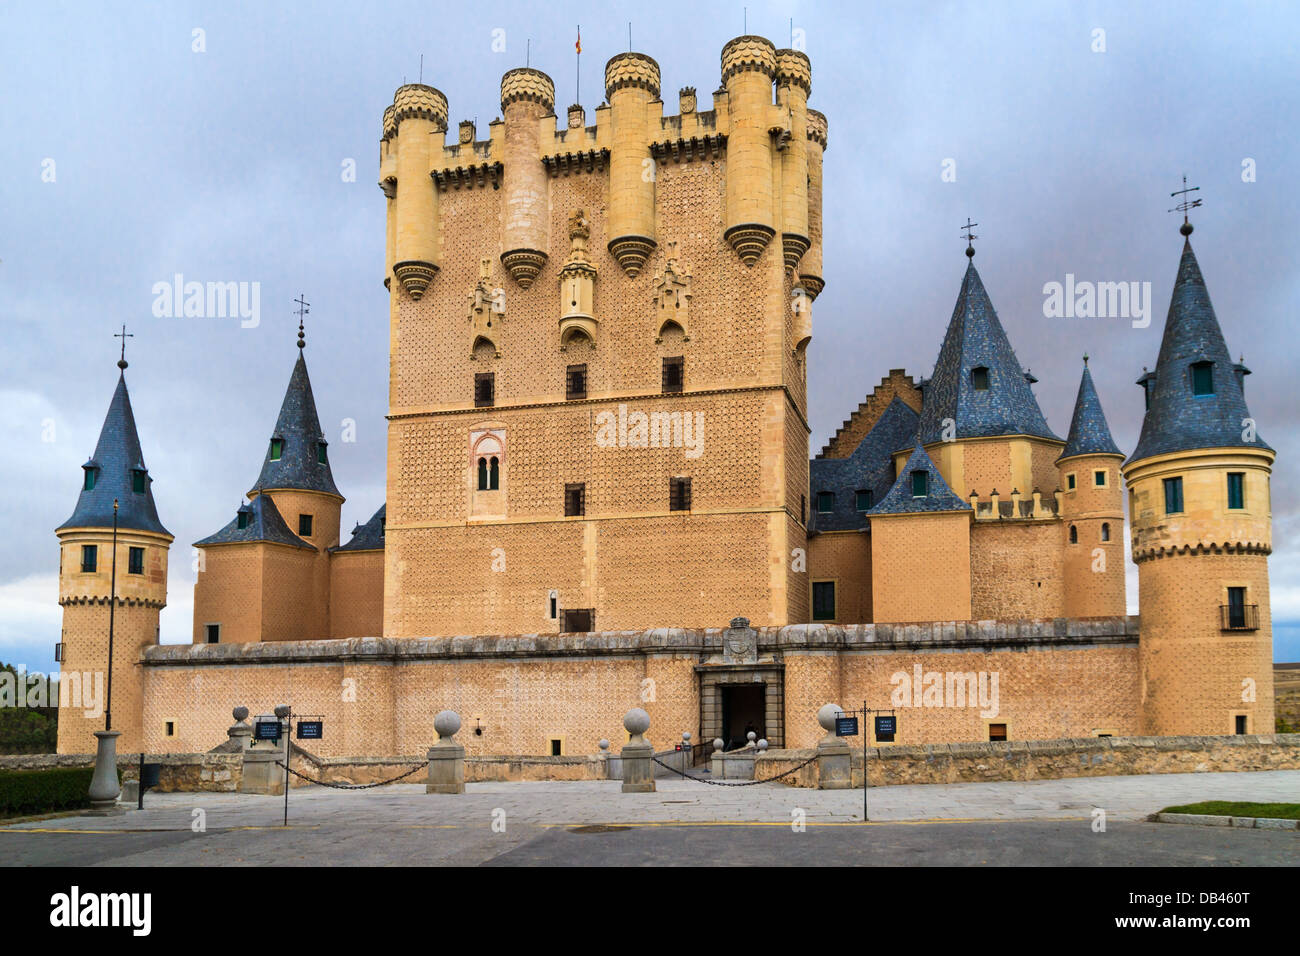 Castello / Alcazar of Segovia (Spagna) Foto Stock